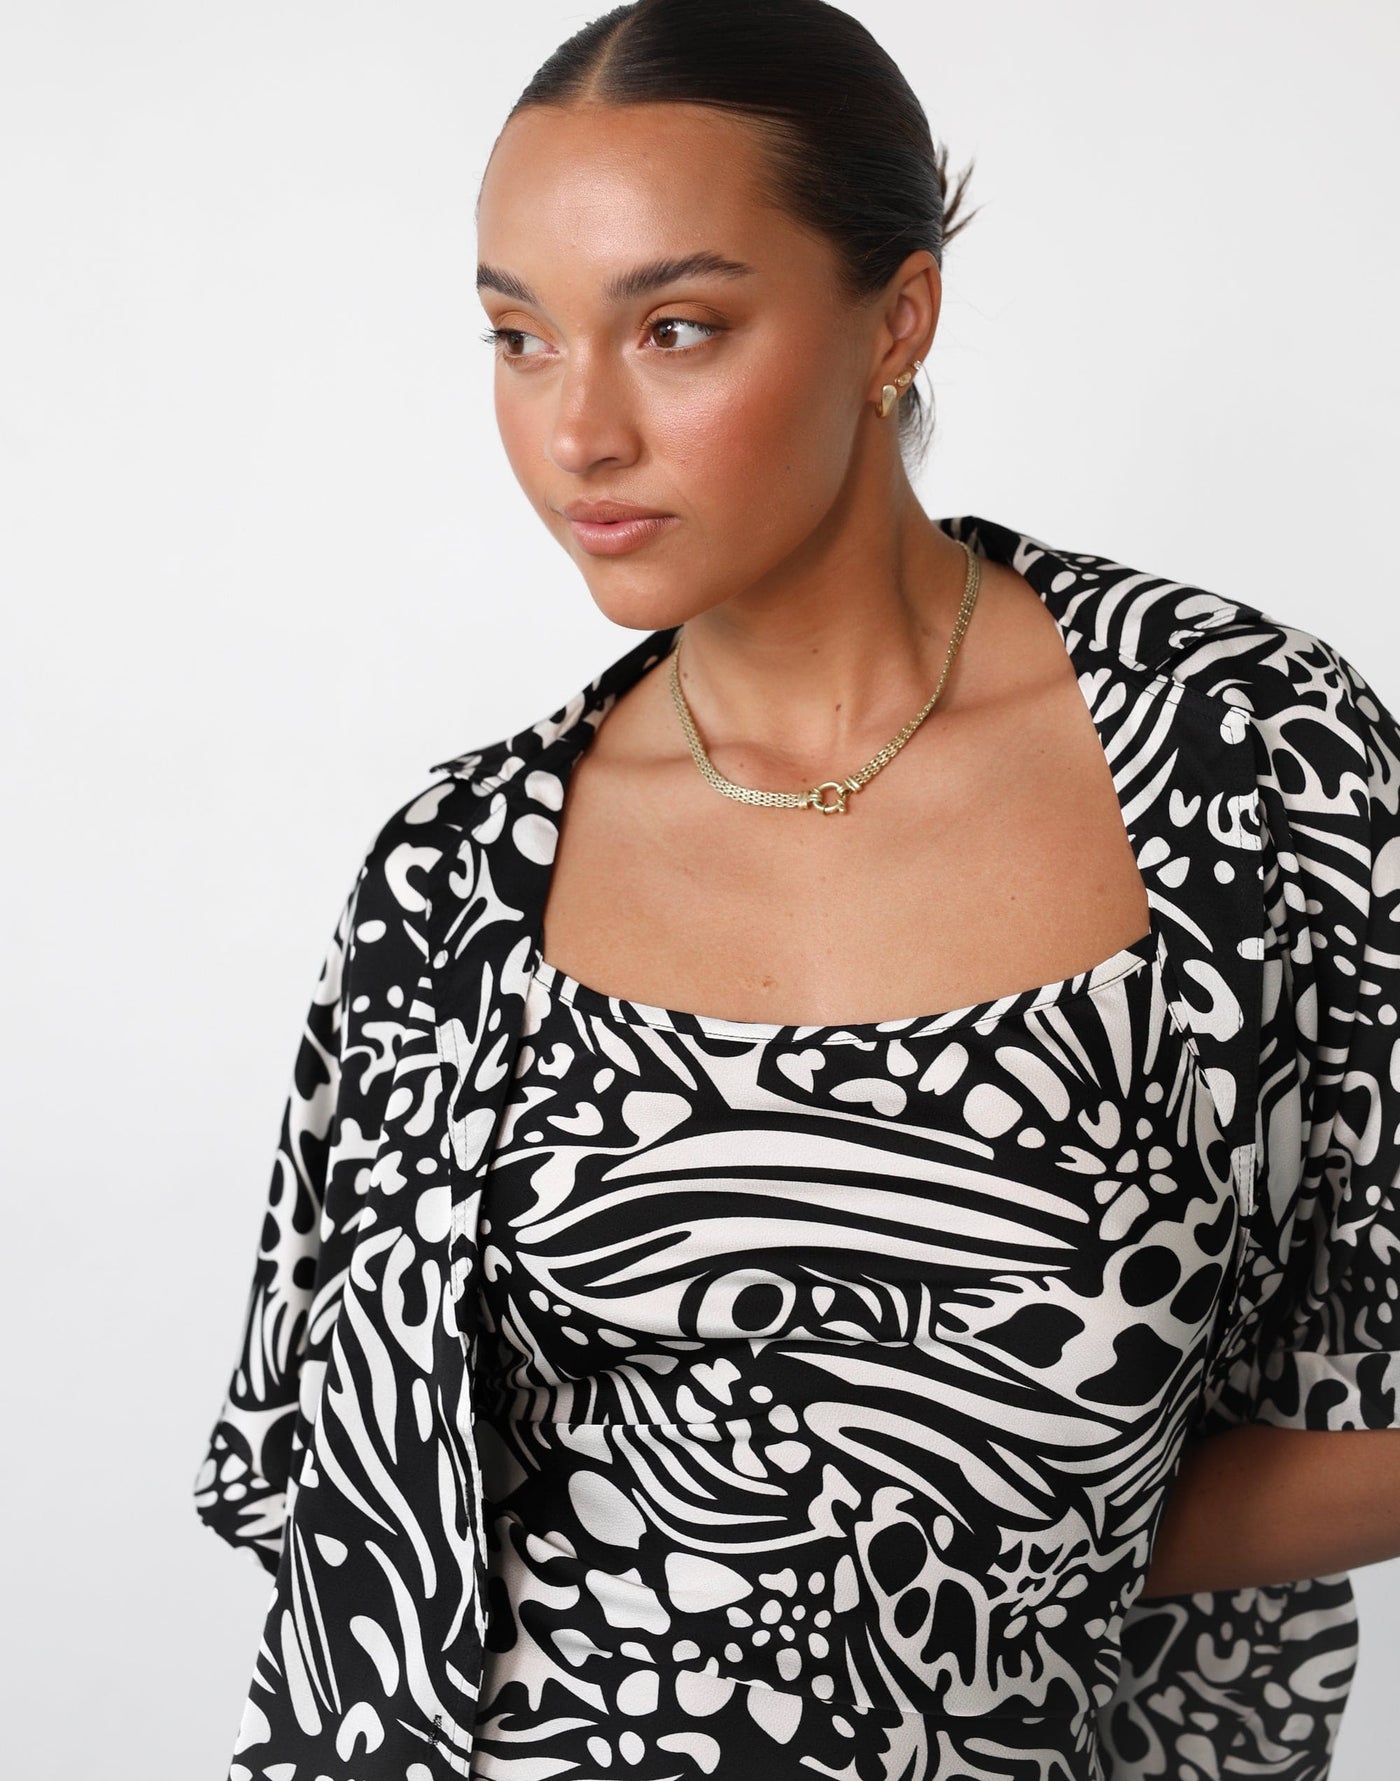 Kova Shirt (Black/White Print) - Button Up Collared Top - Women's Shirt - Charcoal Clothing